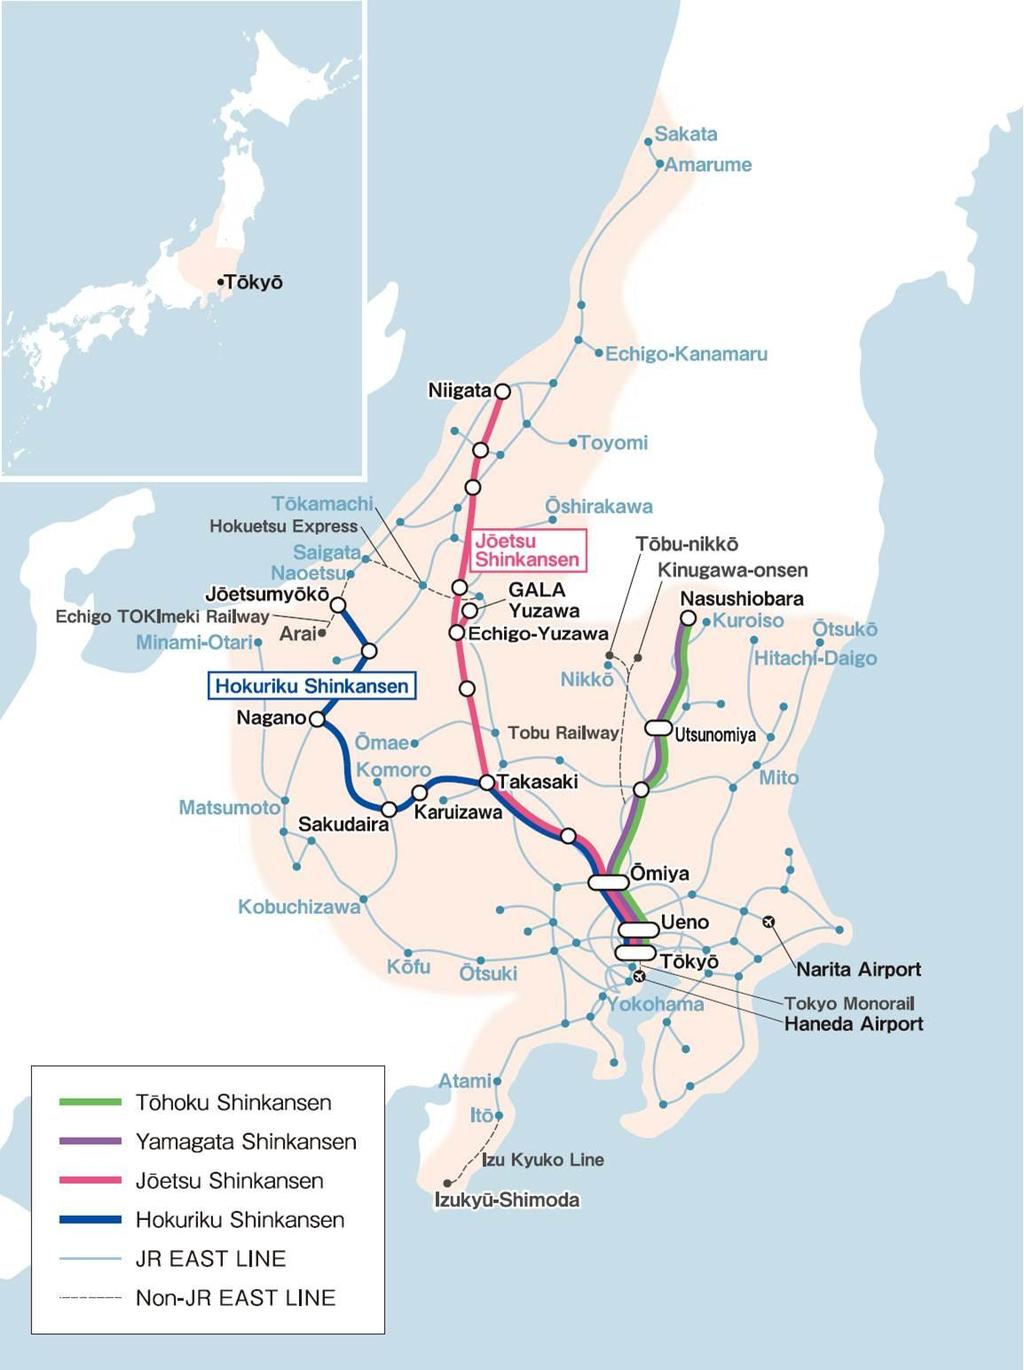 "JR EAST PASS (Nagano, Niigata area)" * GALA Yuzawa Station will be open on a temporary basis.